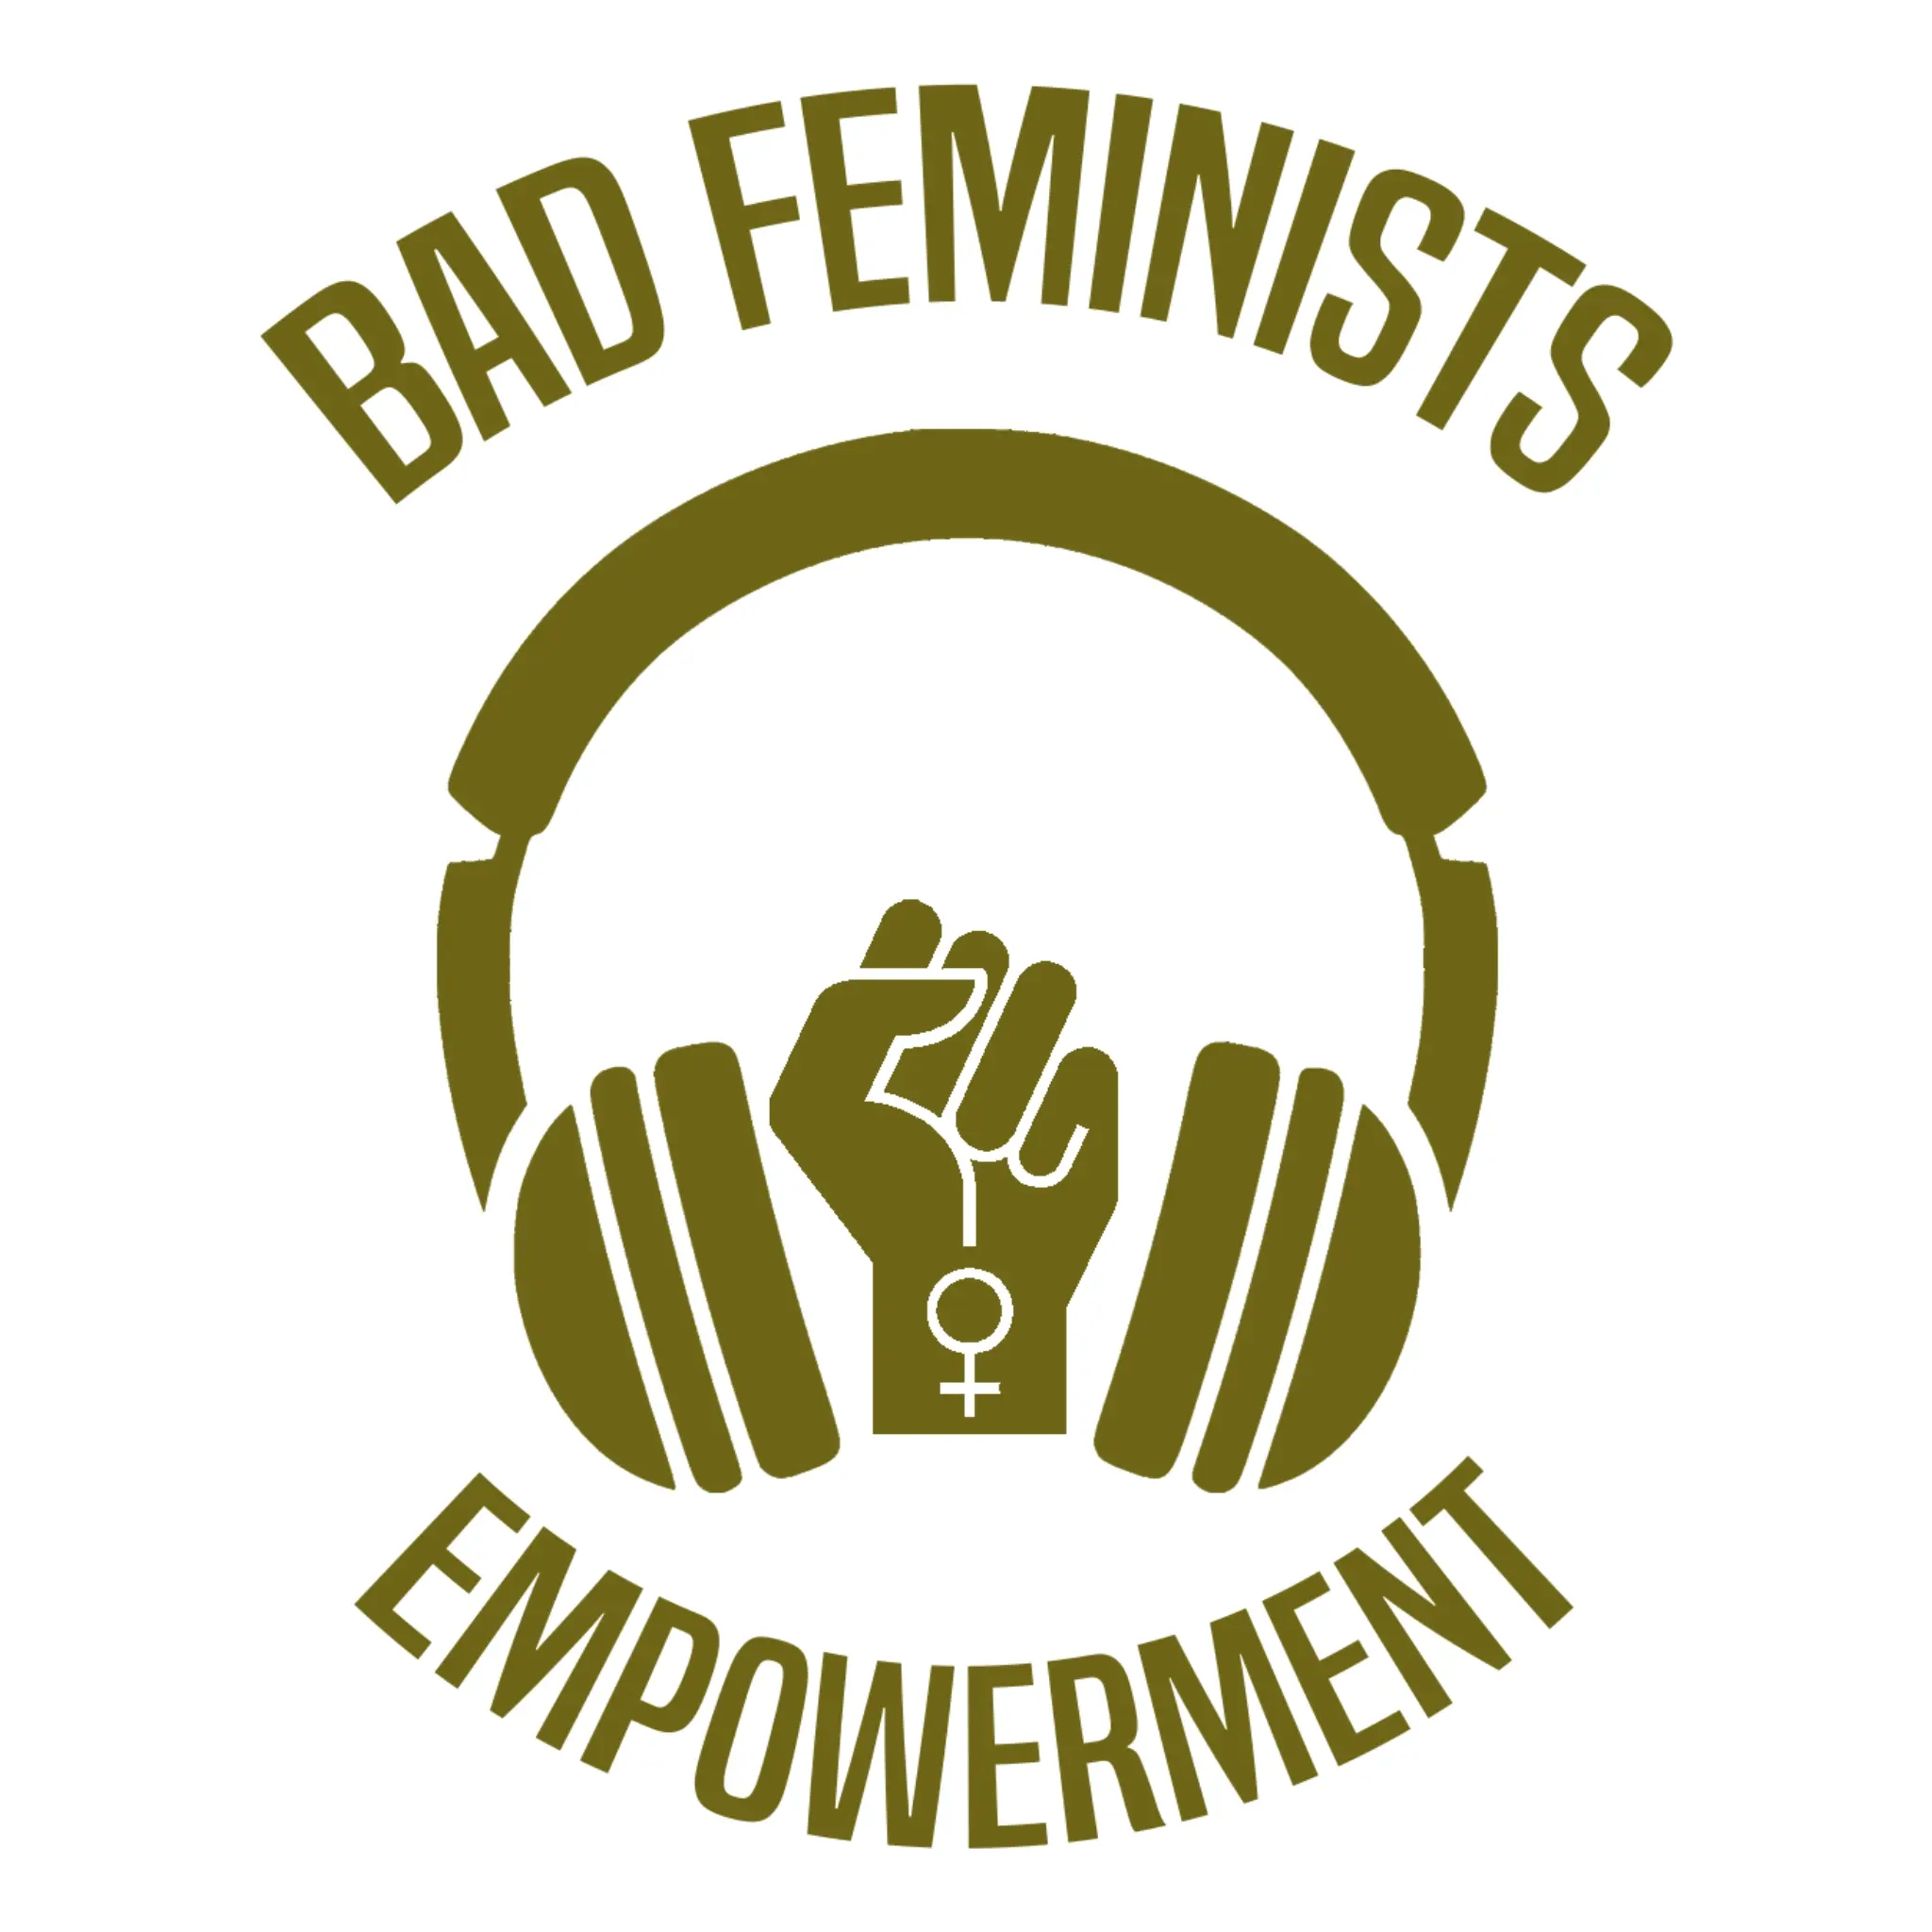 Bad Feminists